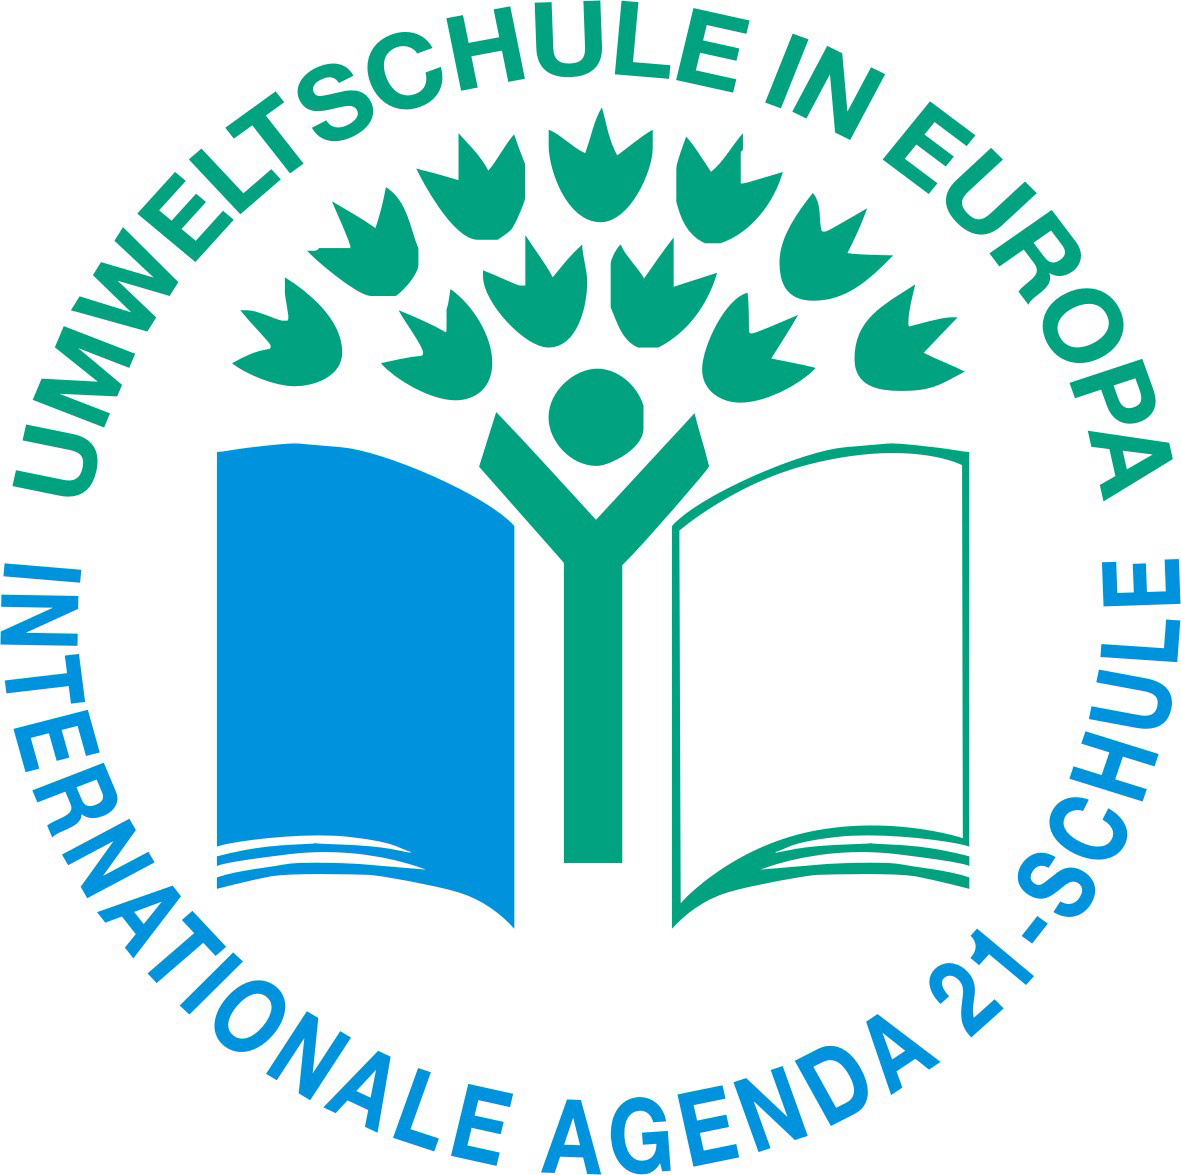 logo_agenda21schule